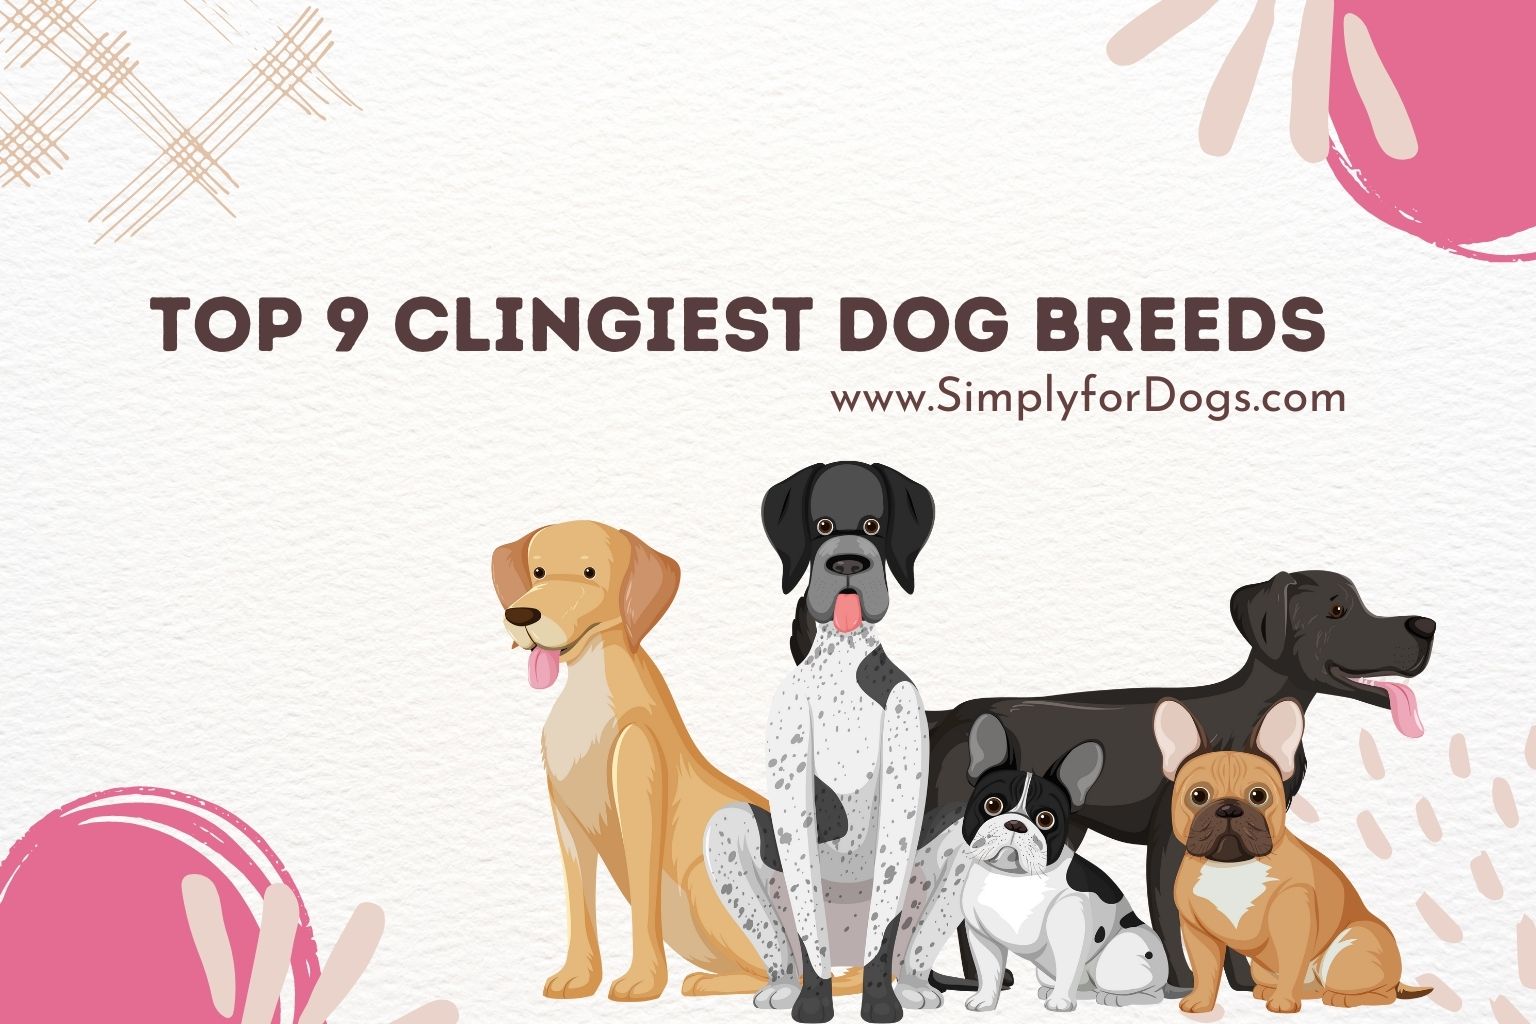 Top 9 Clingiest Dog Breeds